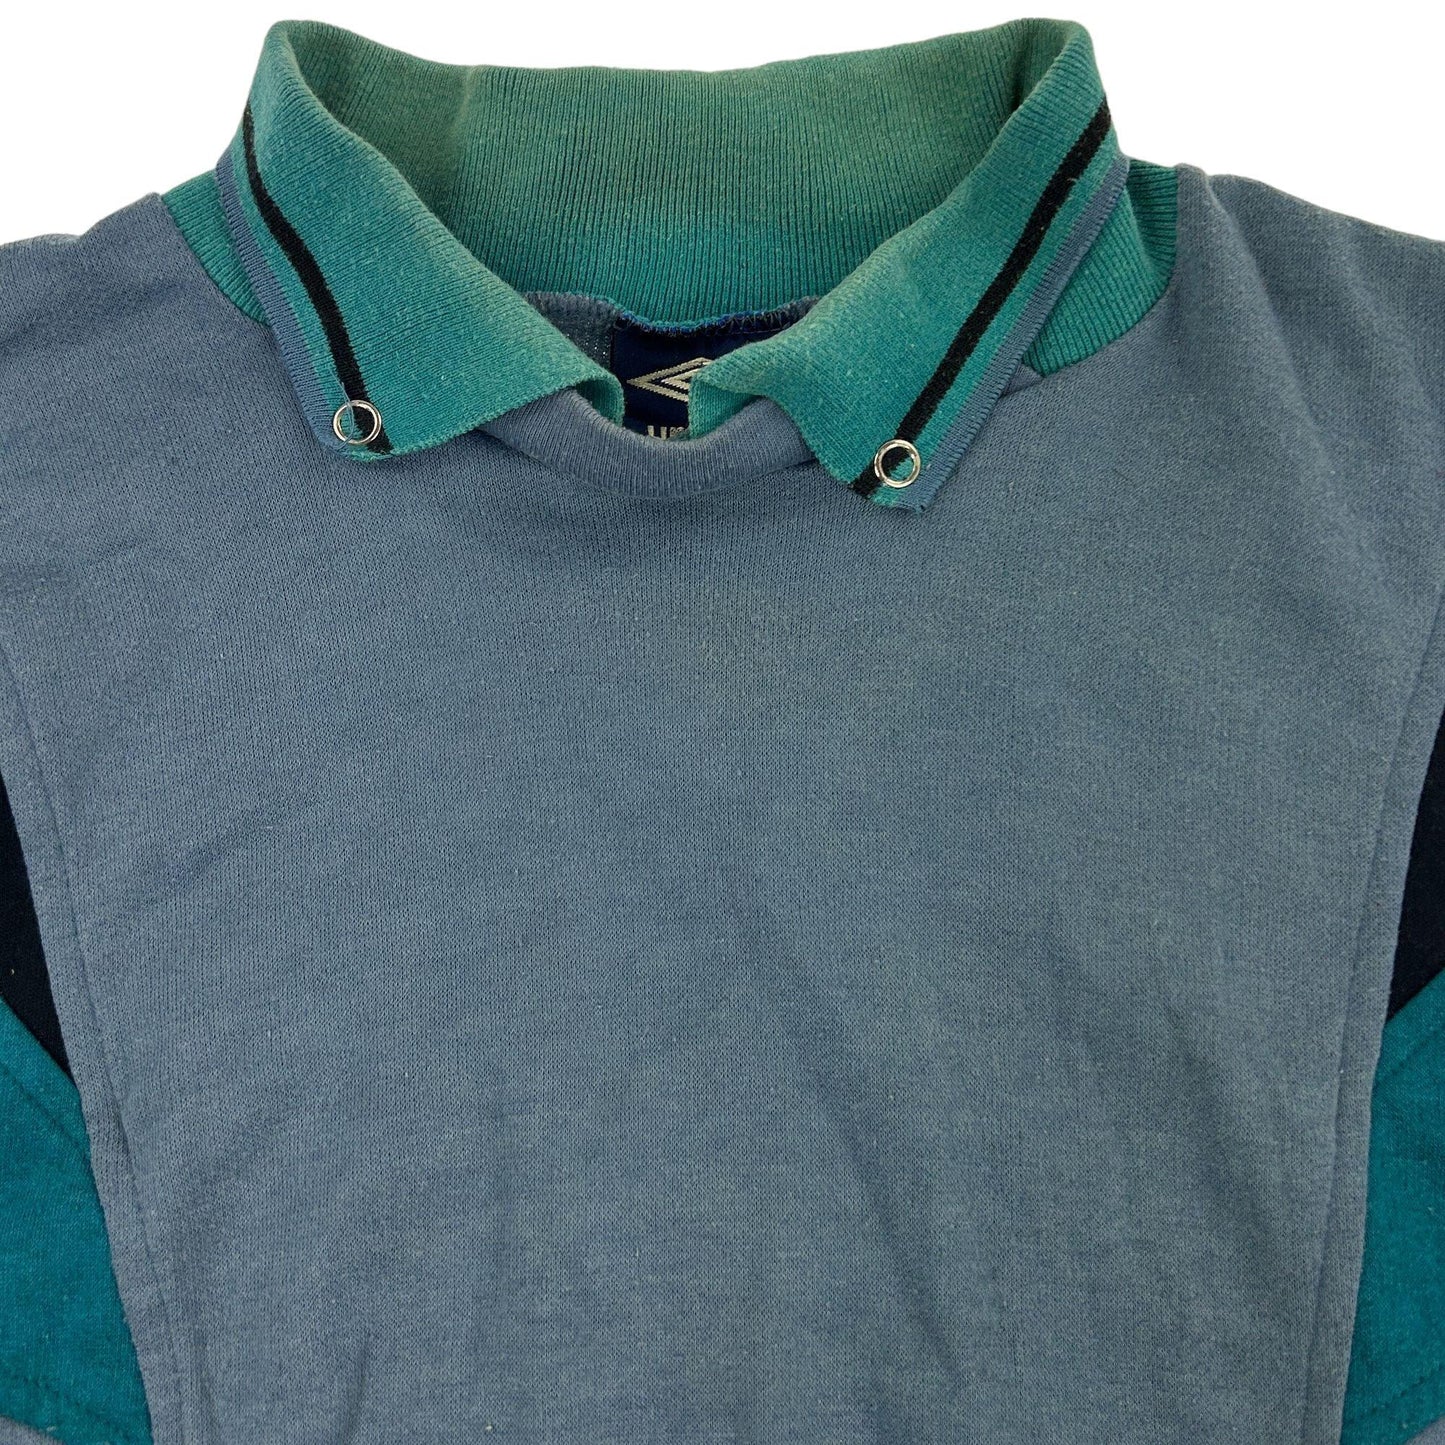 Vintage Umbro Sweatshirt Size L - Known Source